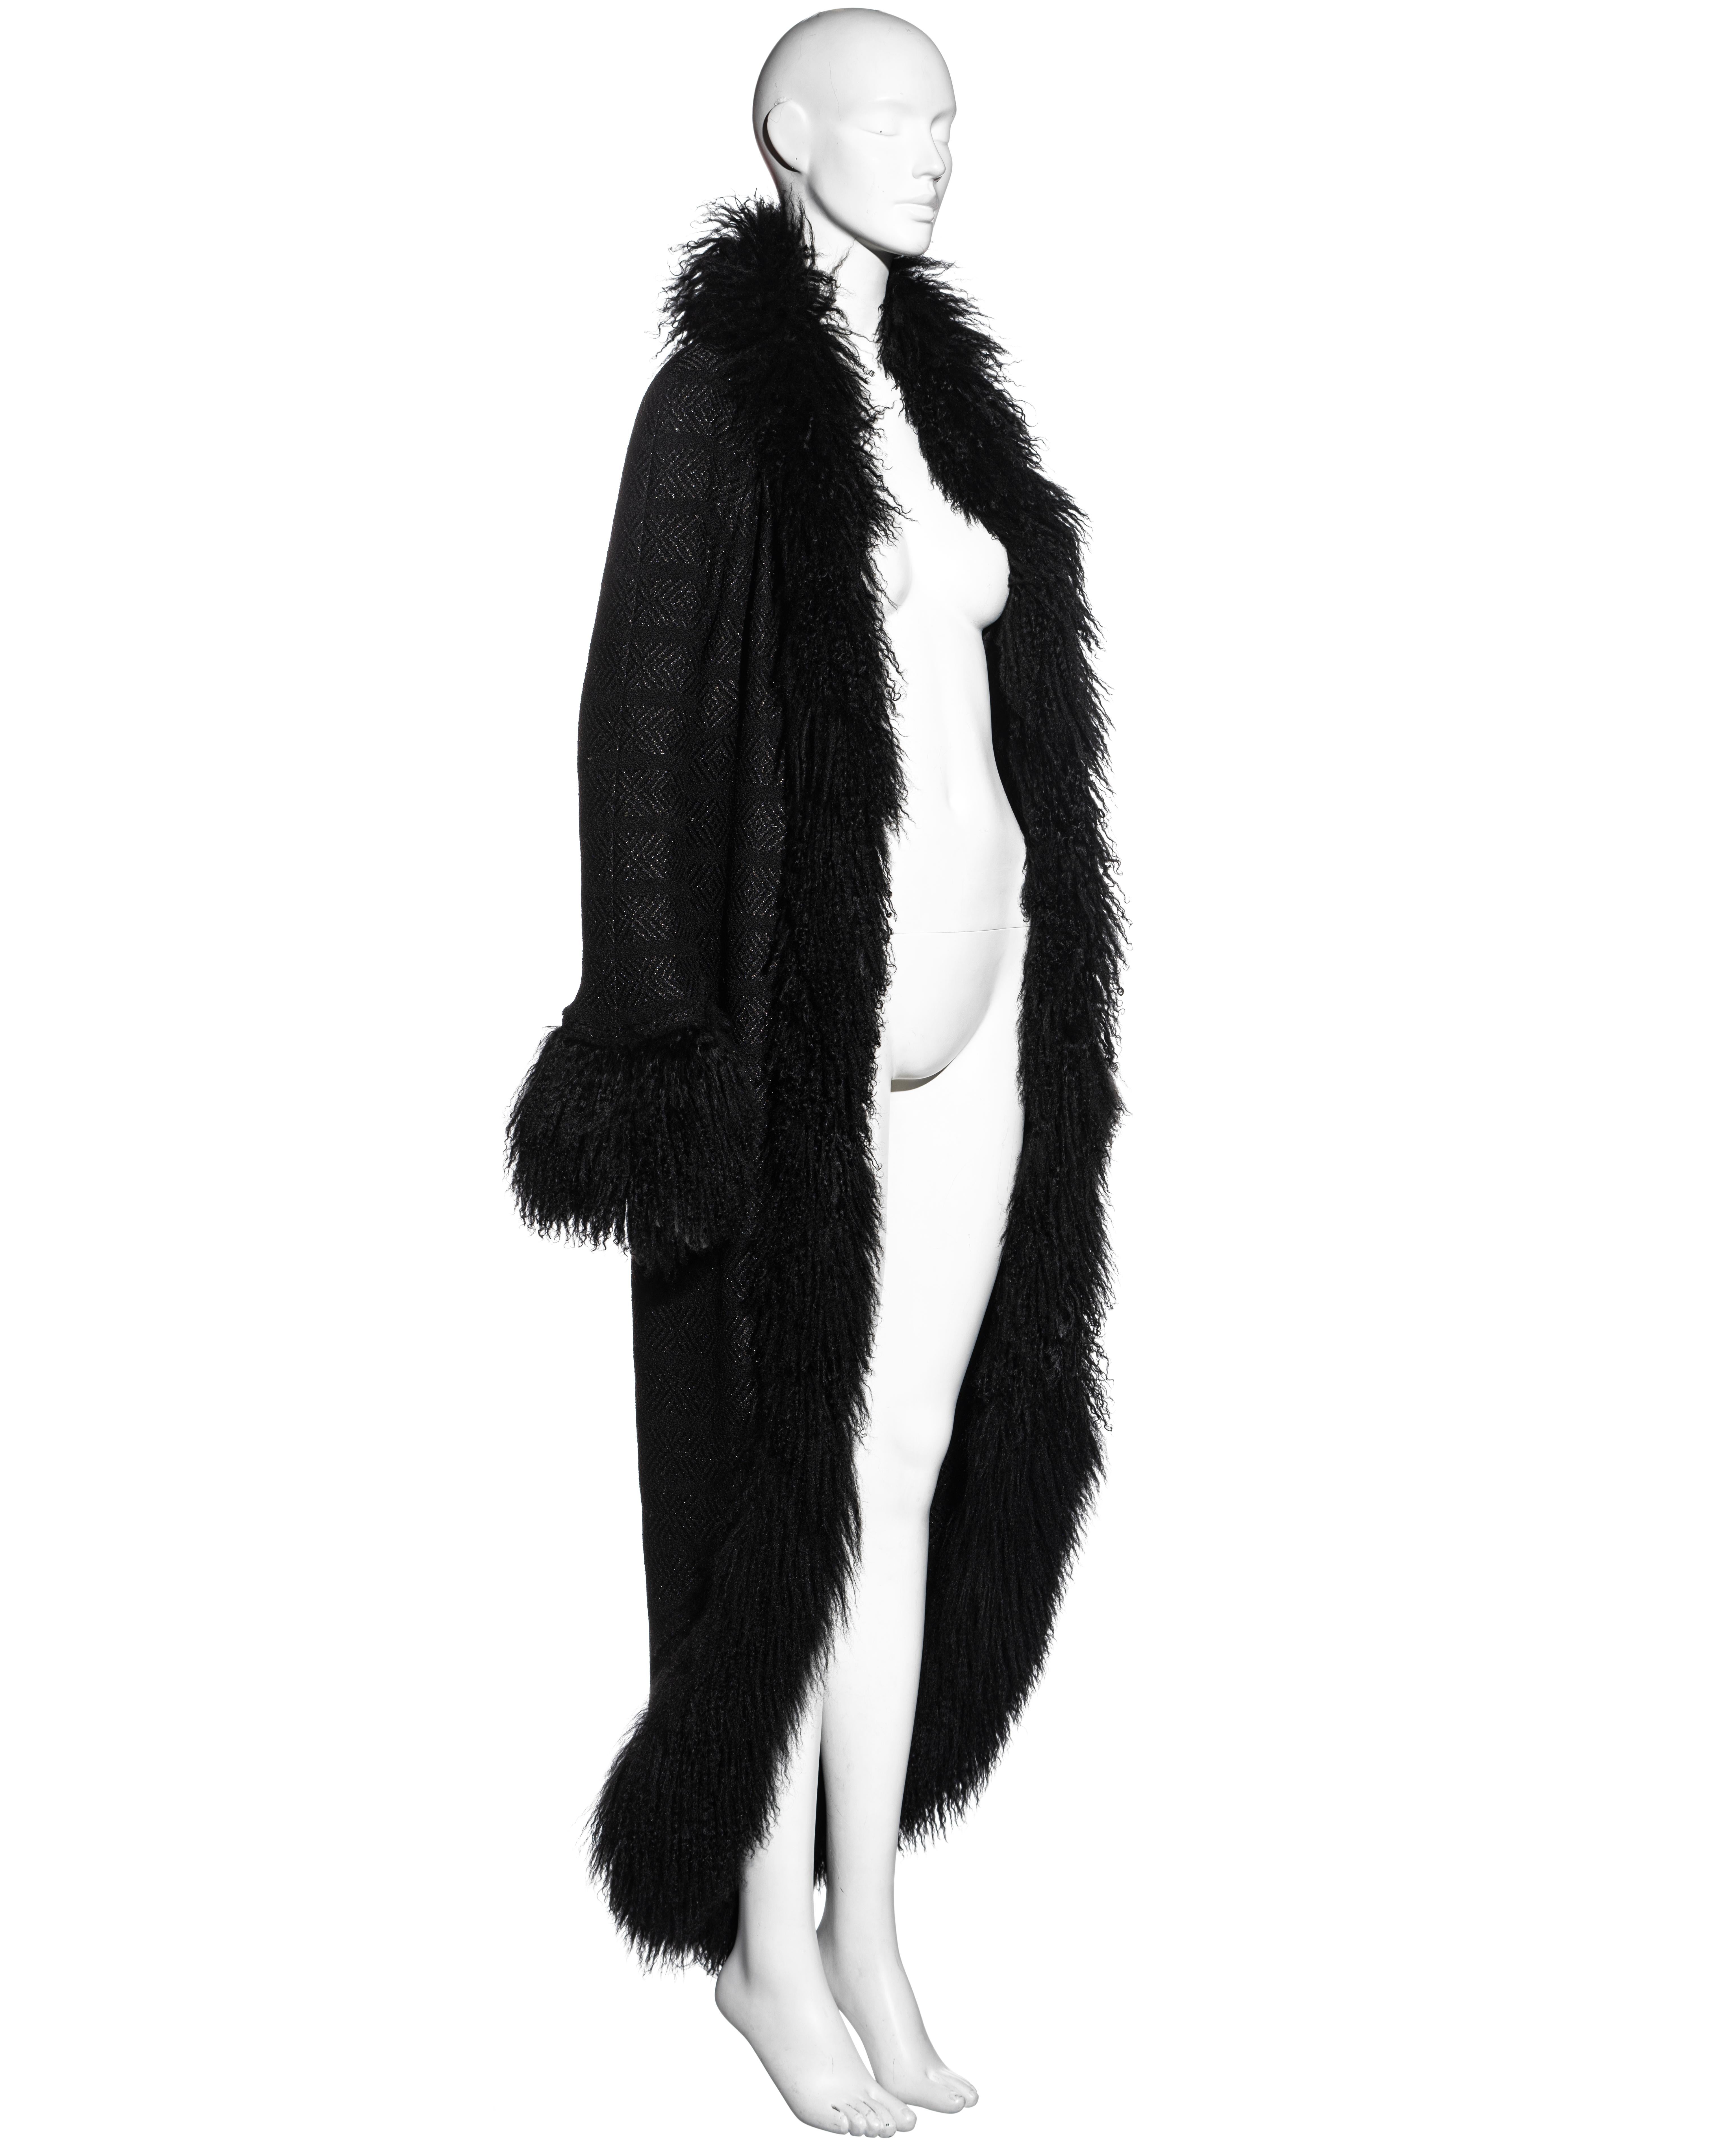 Women's Chanel by Karl Lagerfeld black tweed and Mongolian lambs wool coat, fw 2008